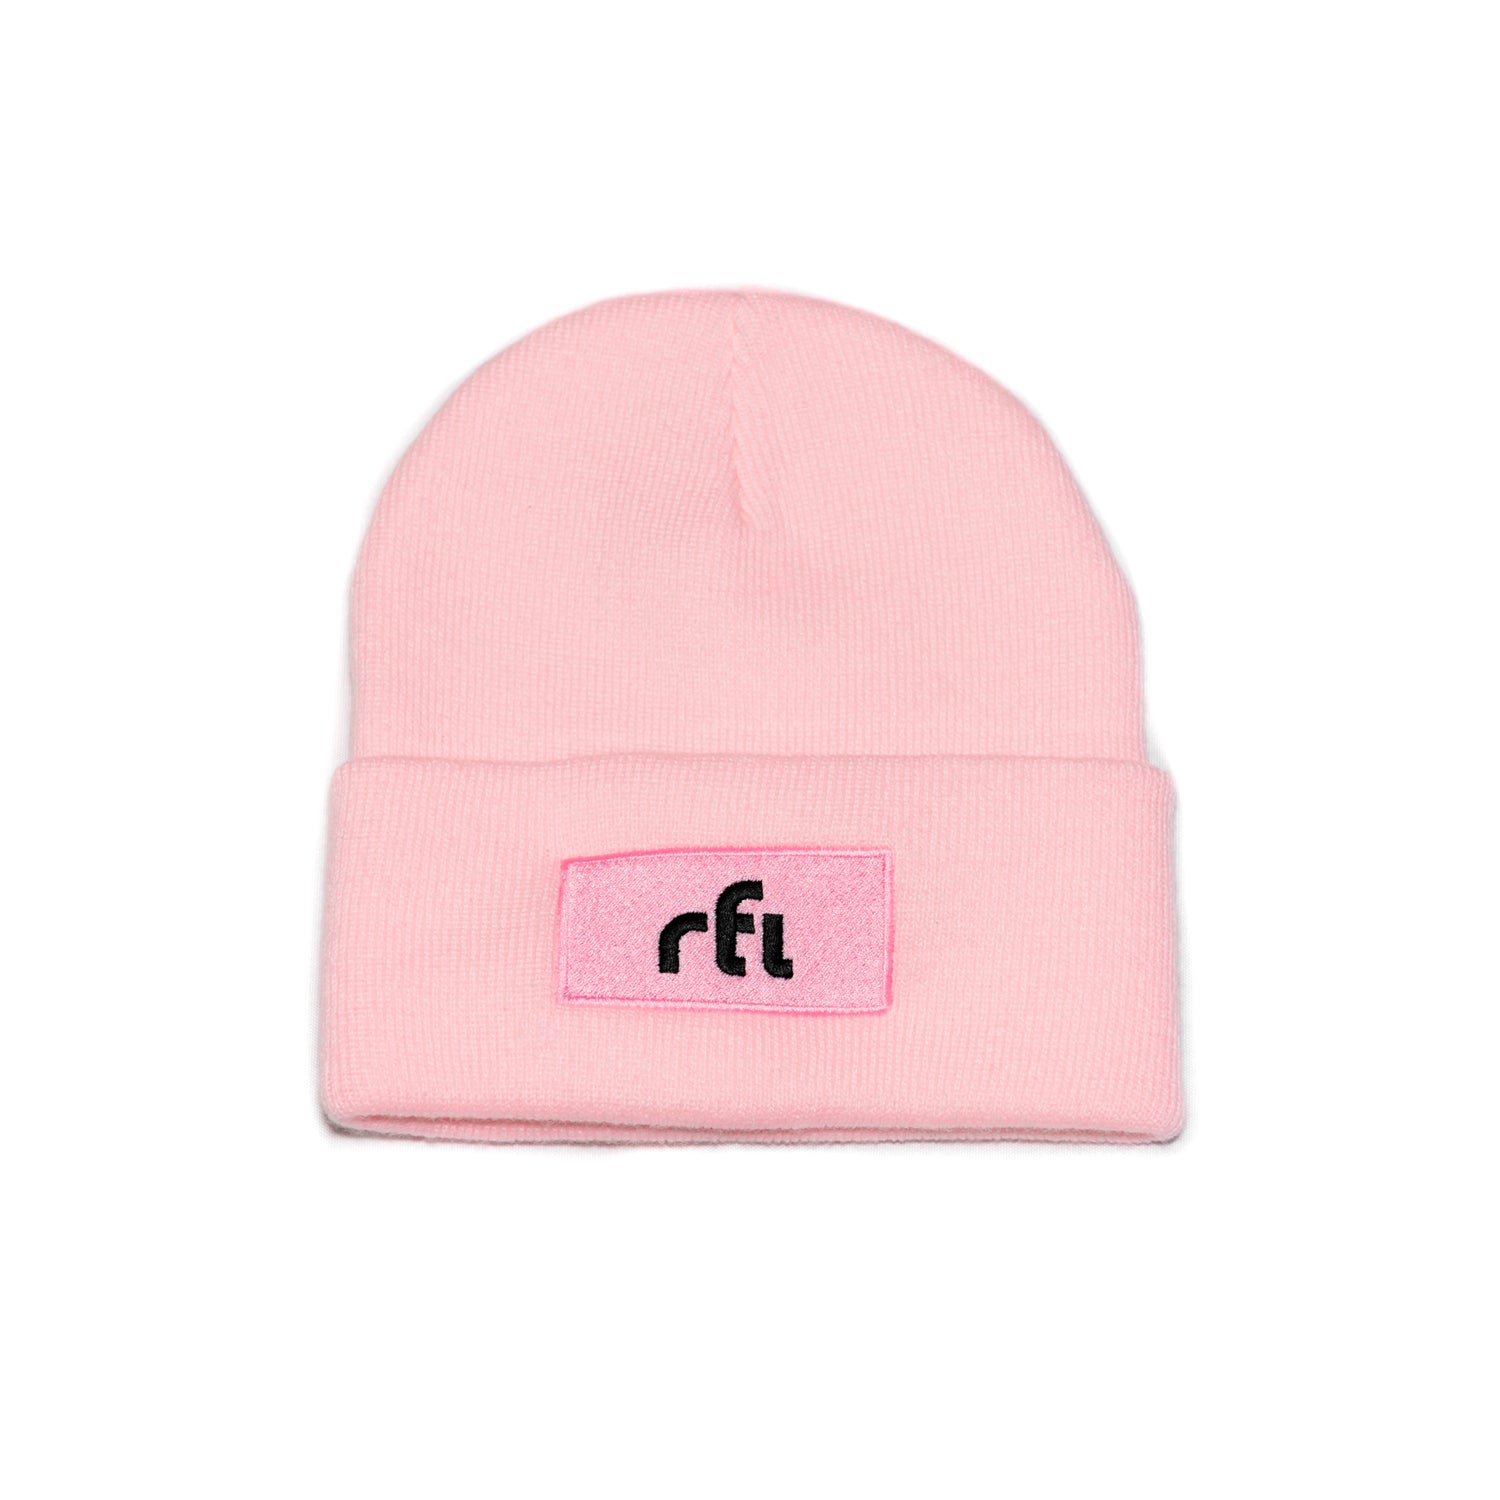 rfi knitted cuffed toque - rfi apparel - toque